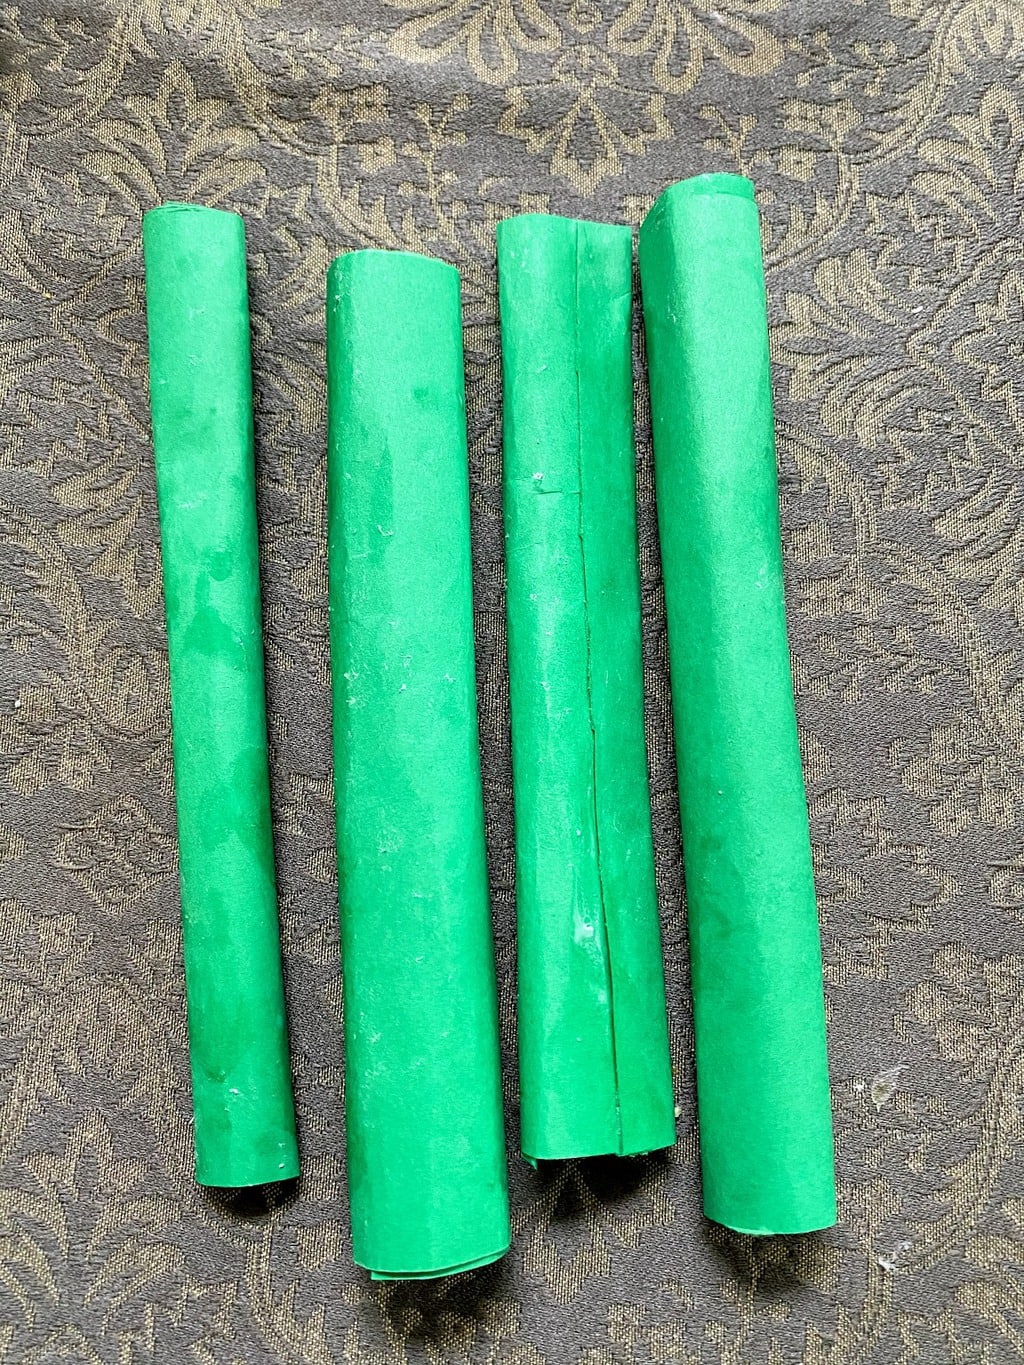 paper asparagus spears